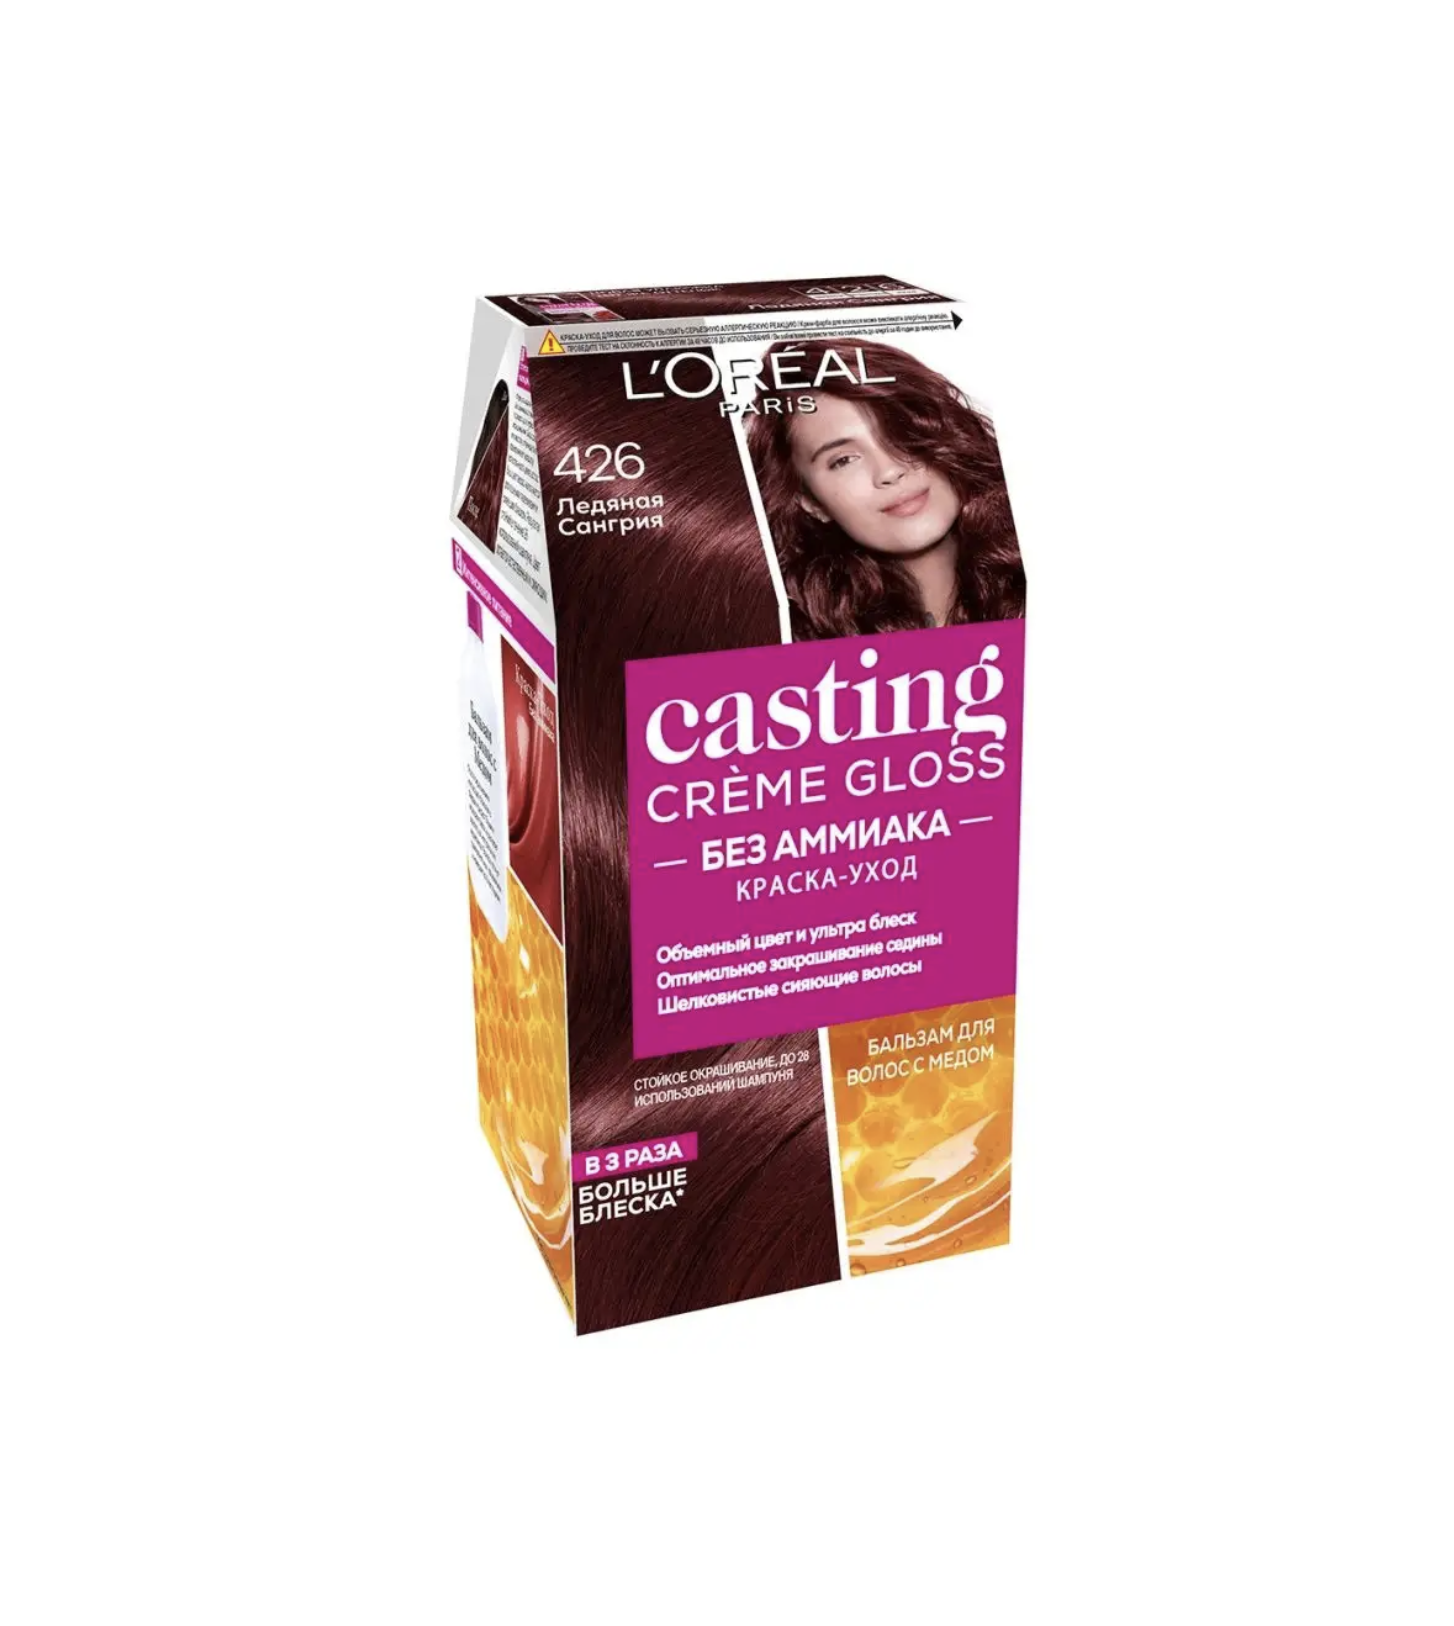     / Casting Creme Gloss - - 426   180 